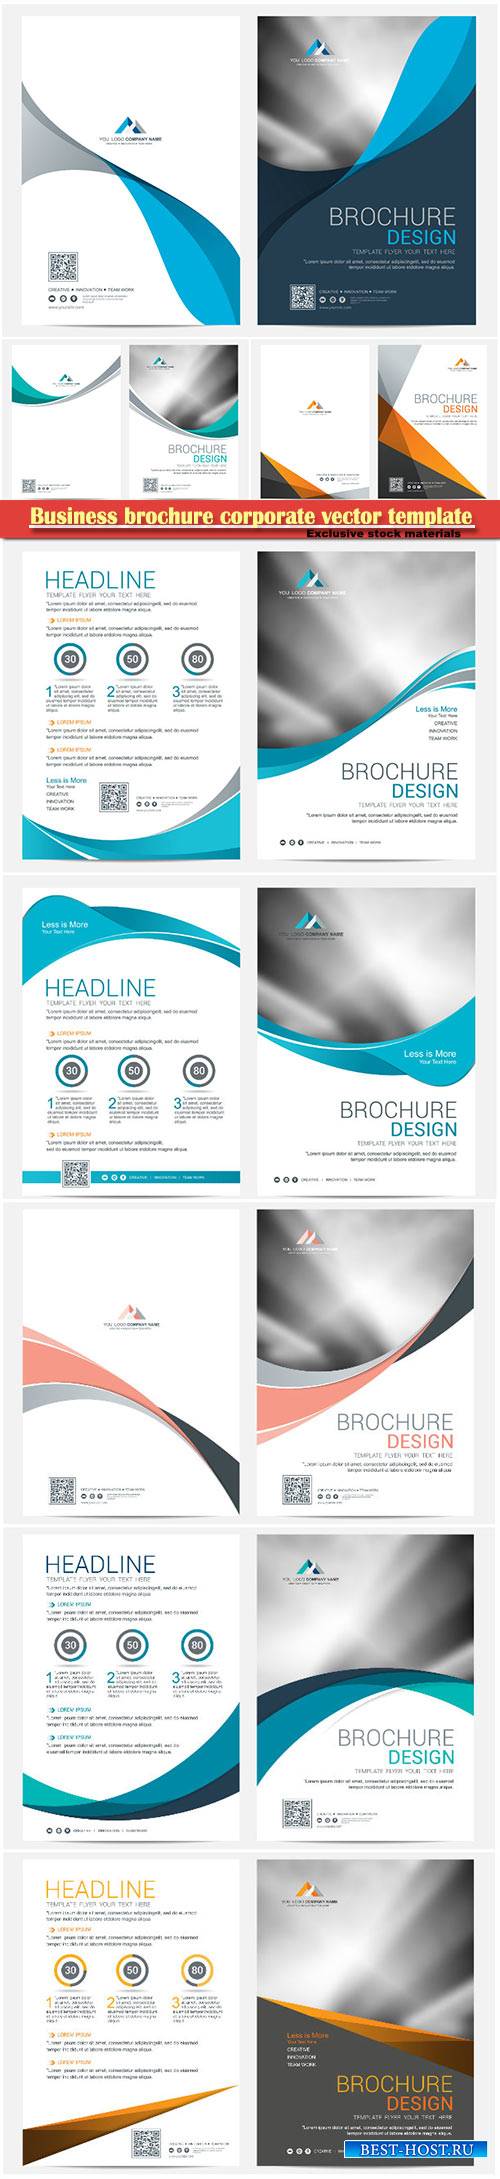 Business brochure corporate vector template, magazine flyer mockup